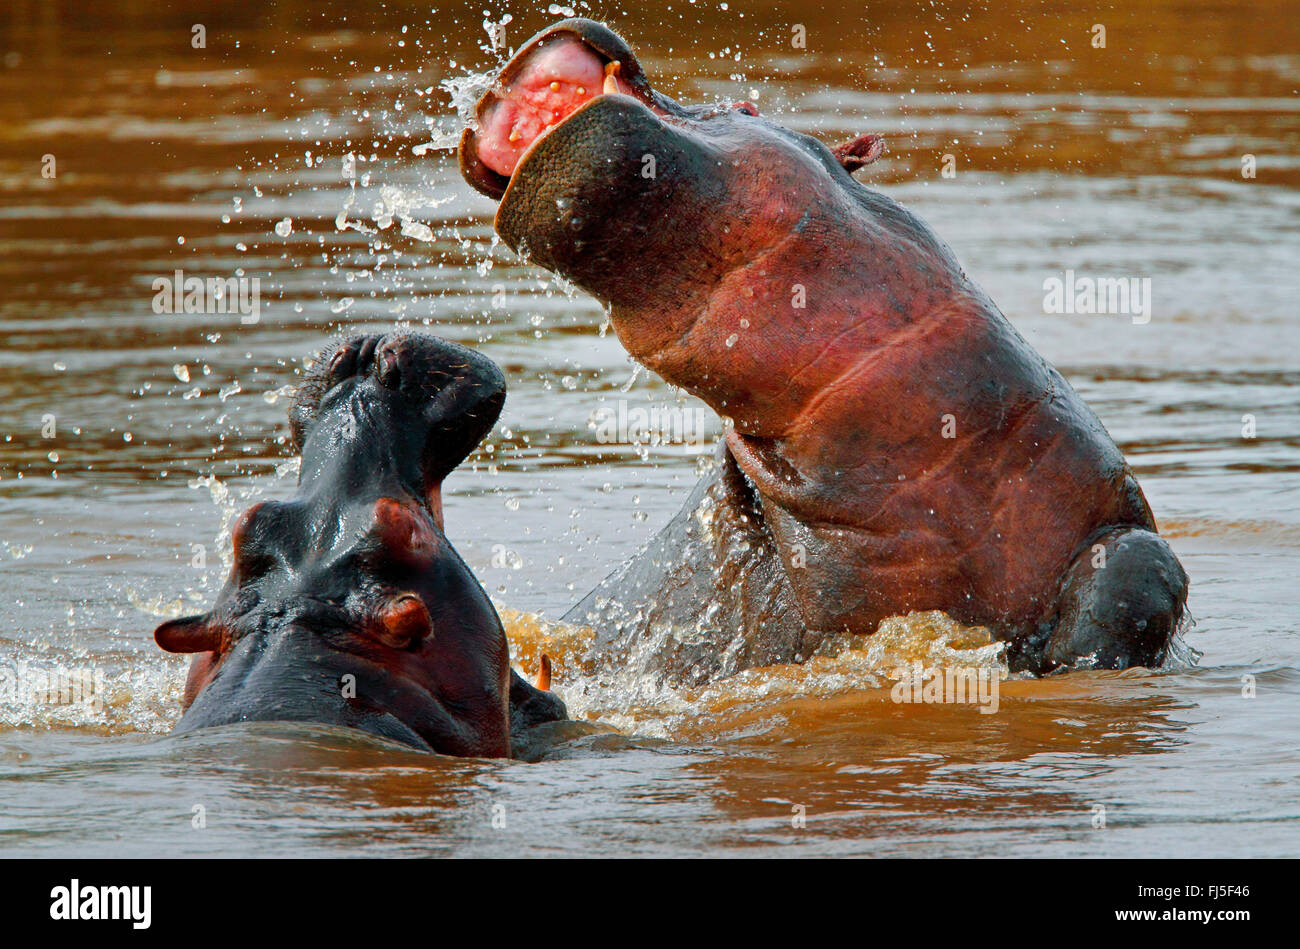 Ippopotamo, ippopotami, comune ippopotamo (Hippopotamus amphibius), due scontri ippopotami in acqua, Kenia Masai Mara National Park Foto Stock